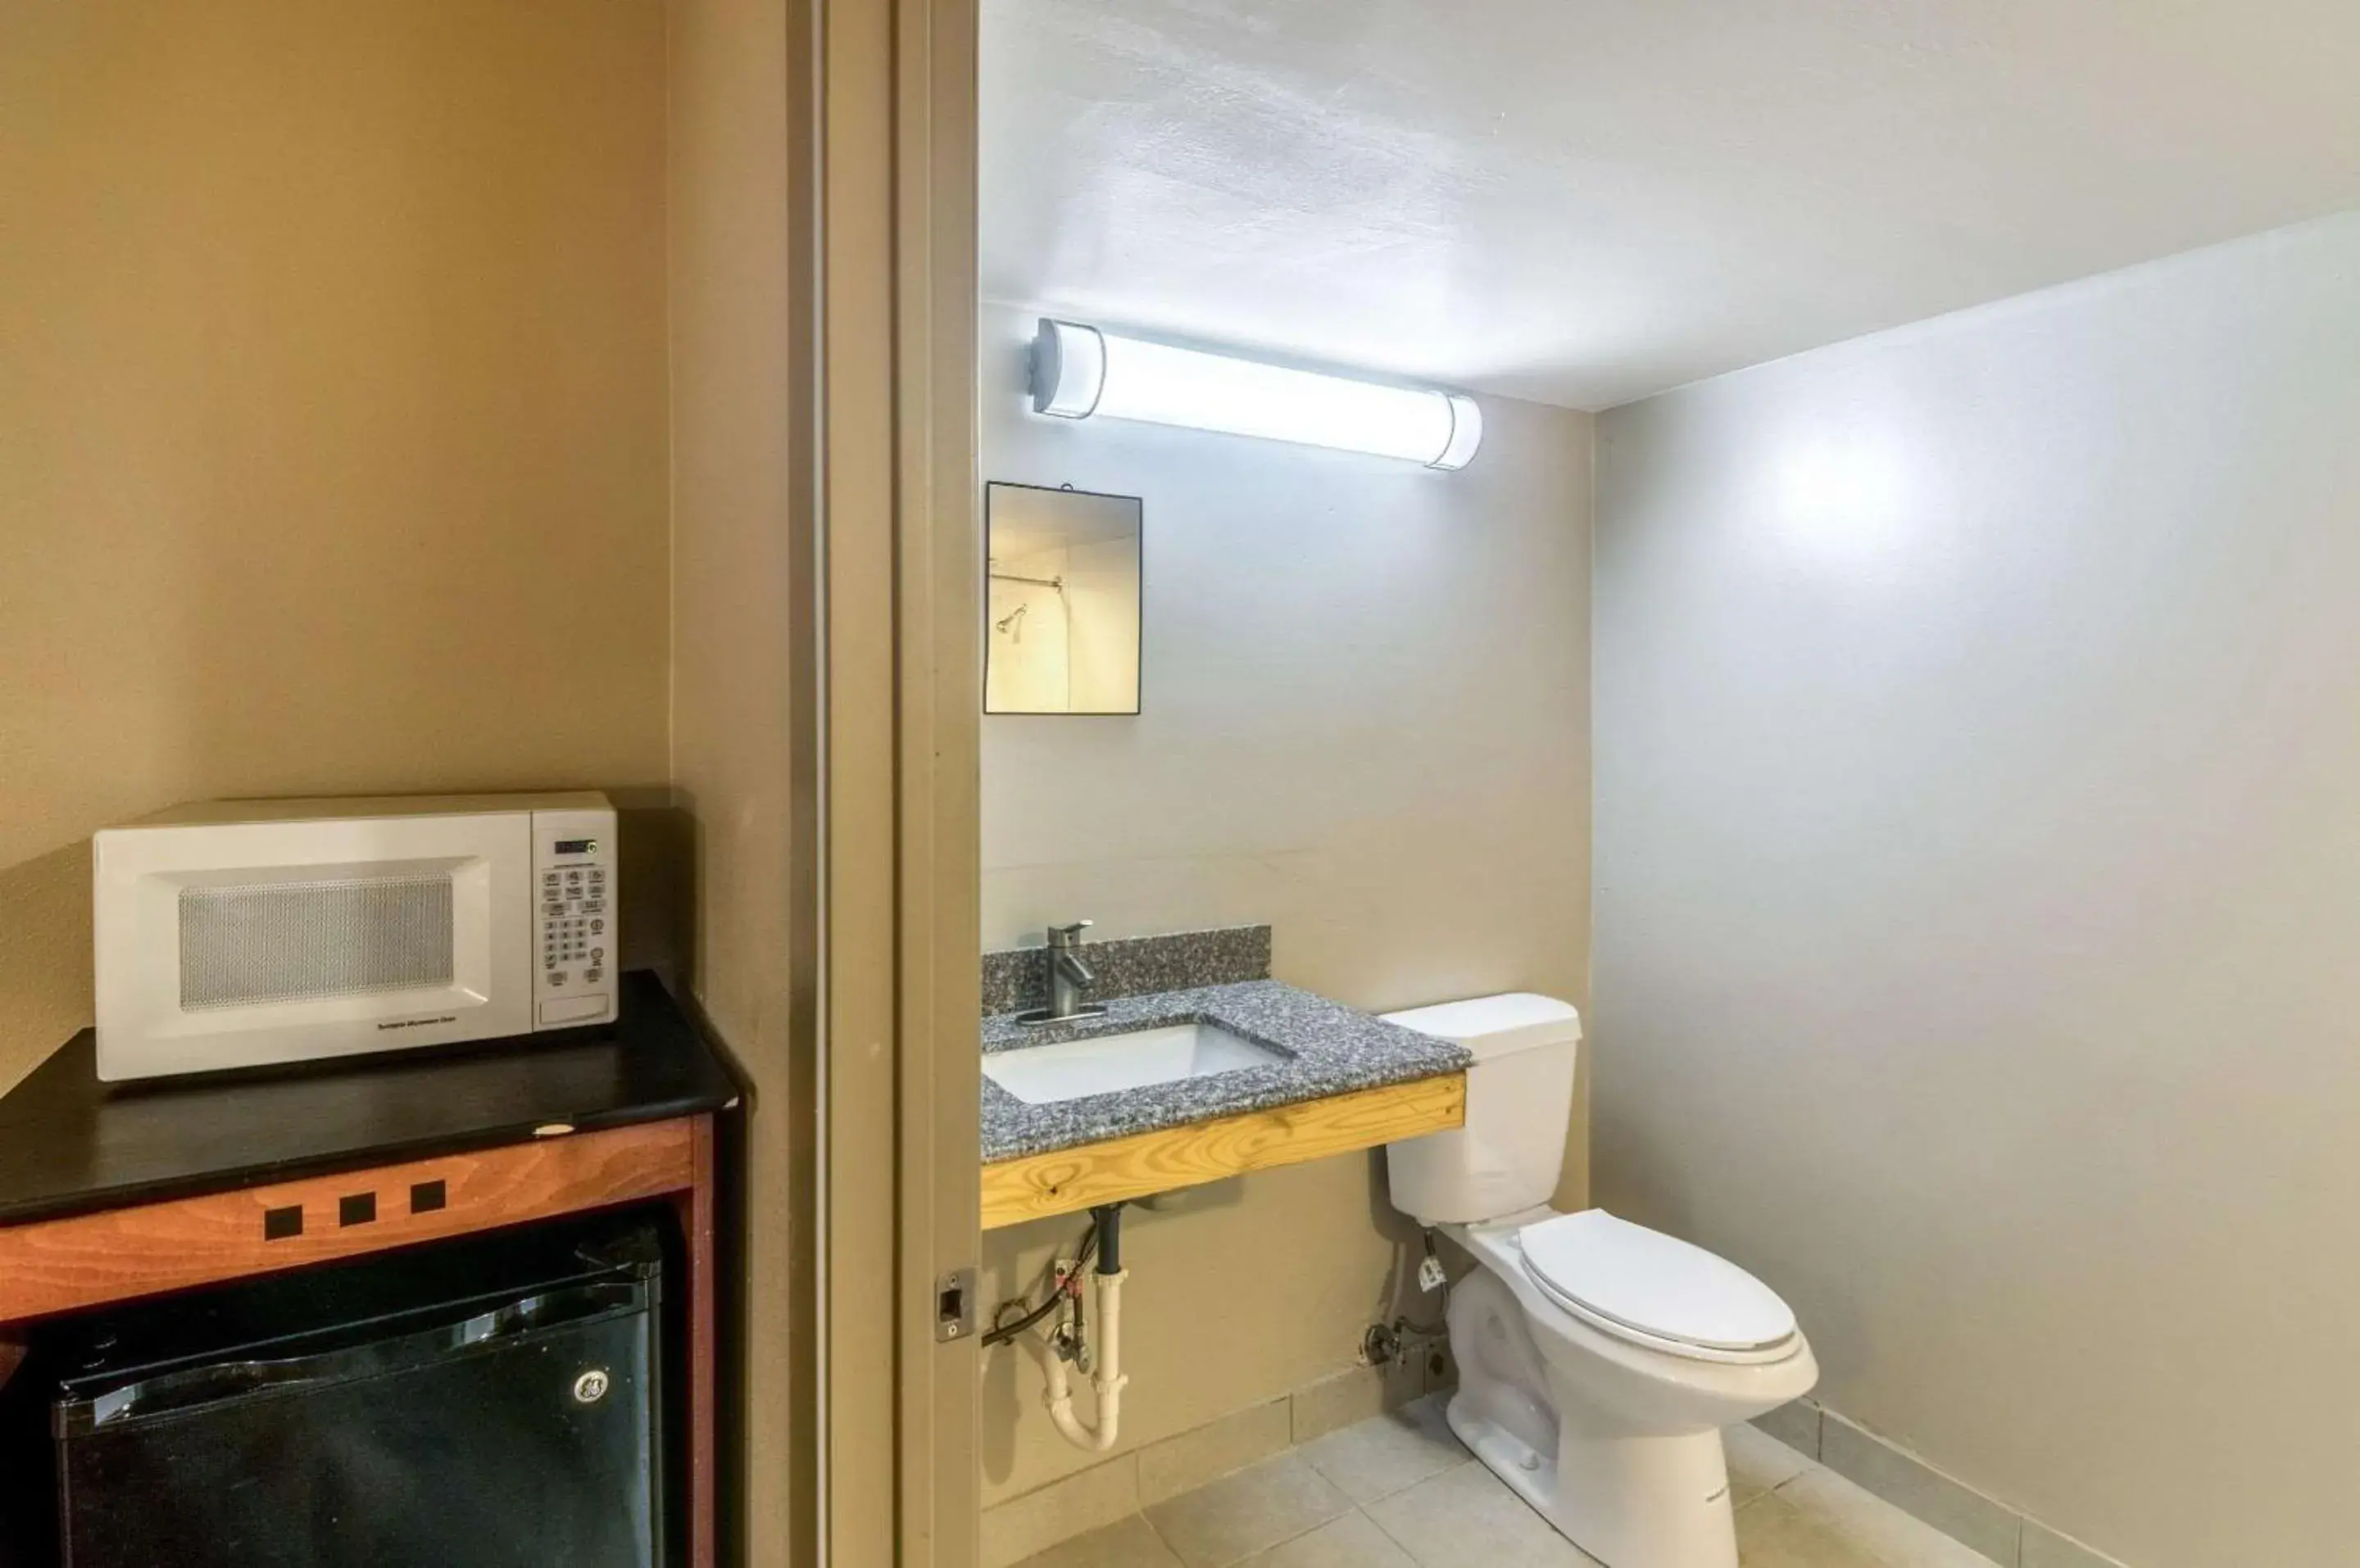 Photo of the whole room, Bathroom in Rodeway Inn Arlington